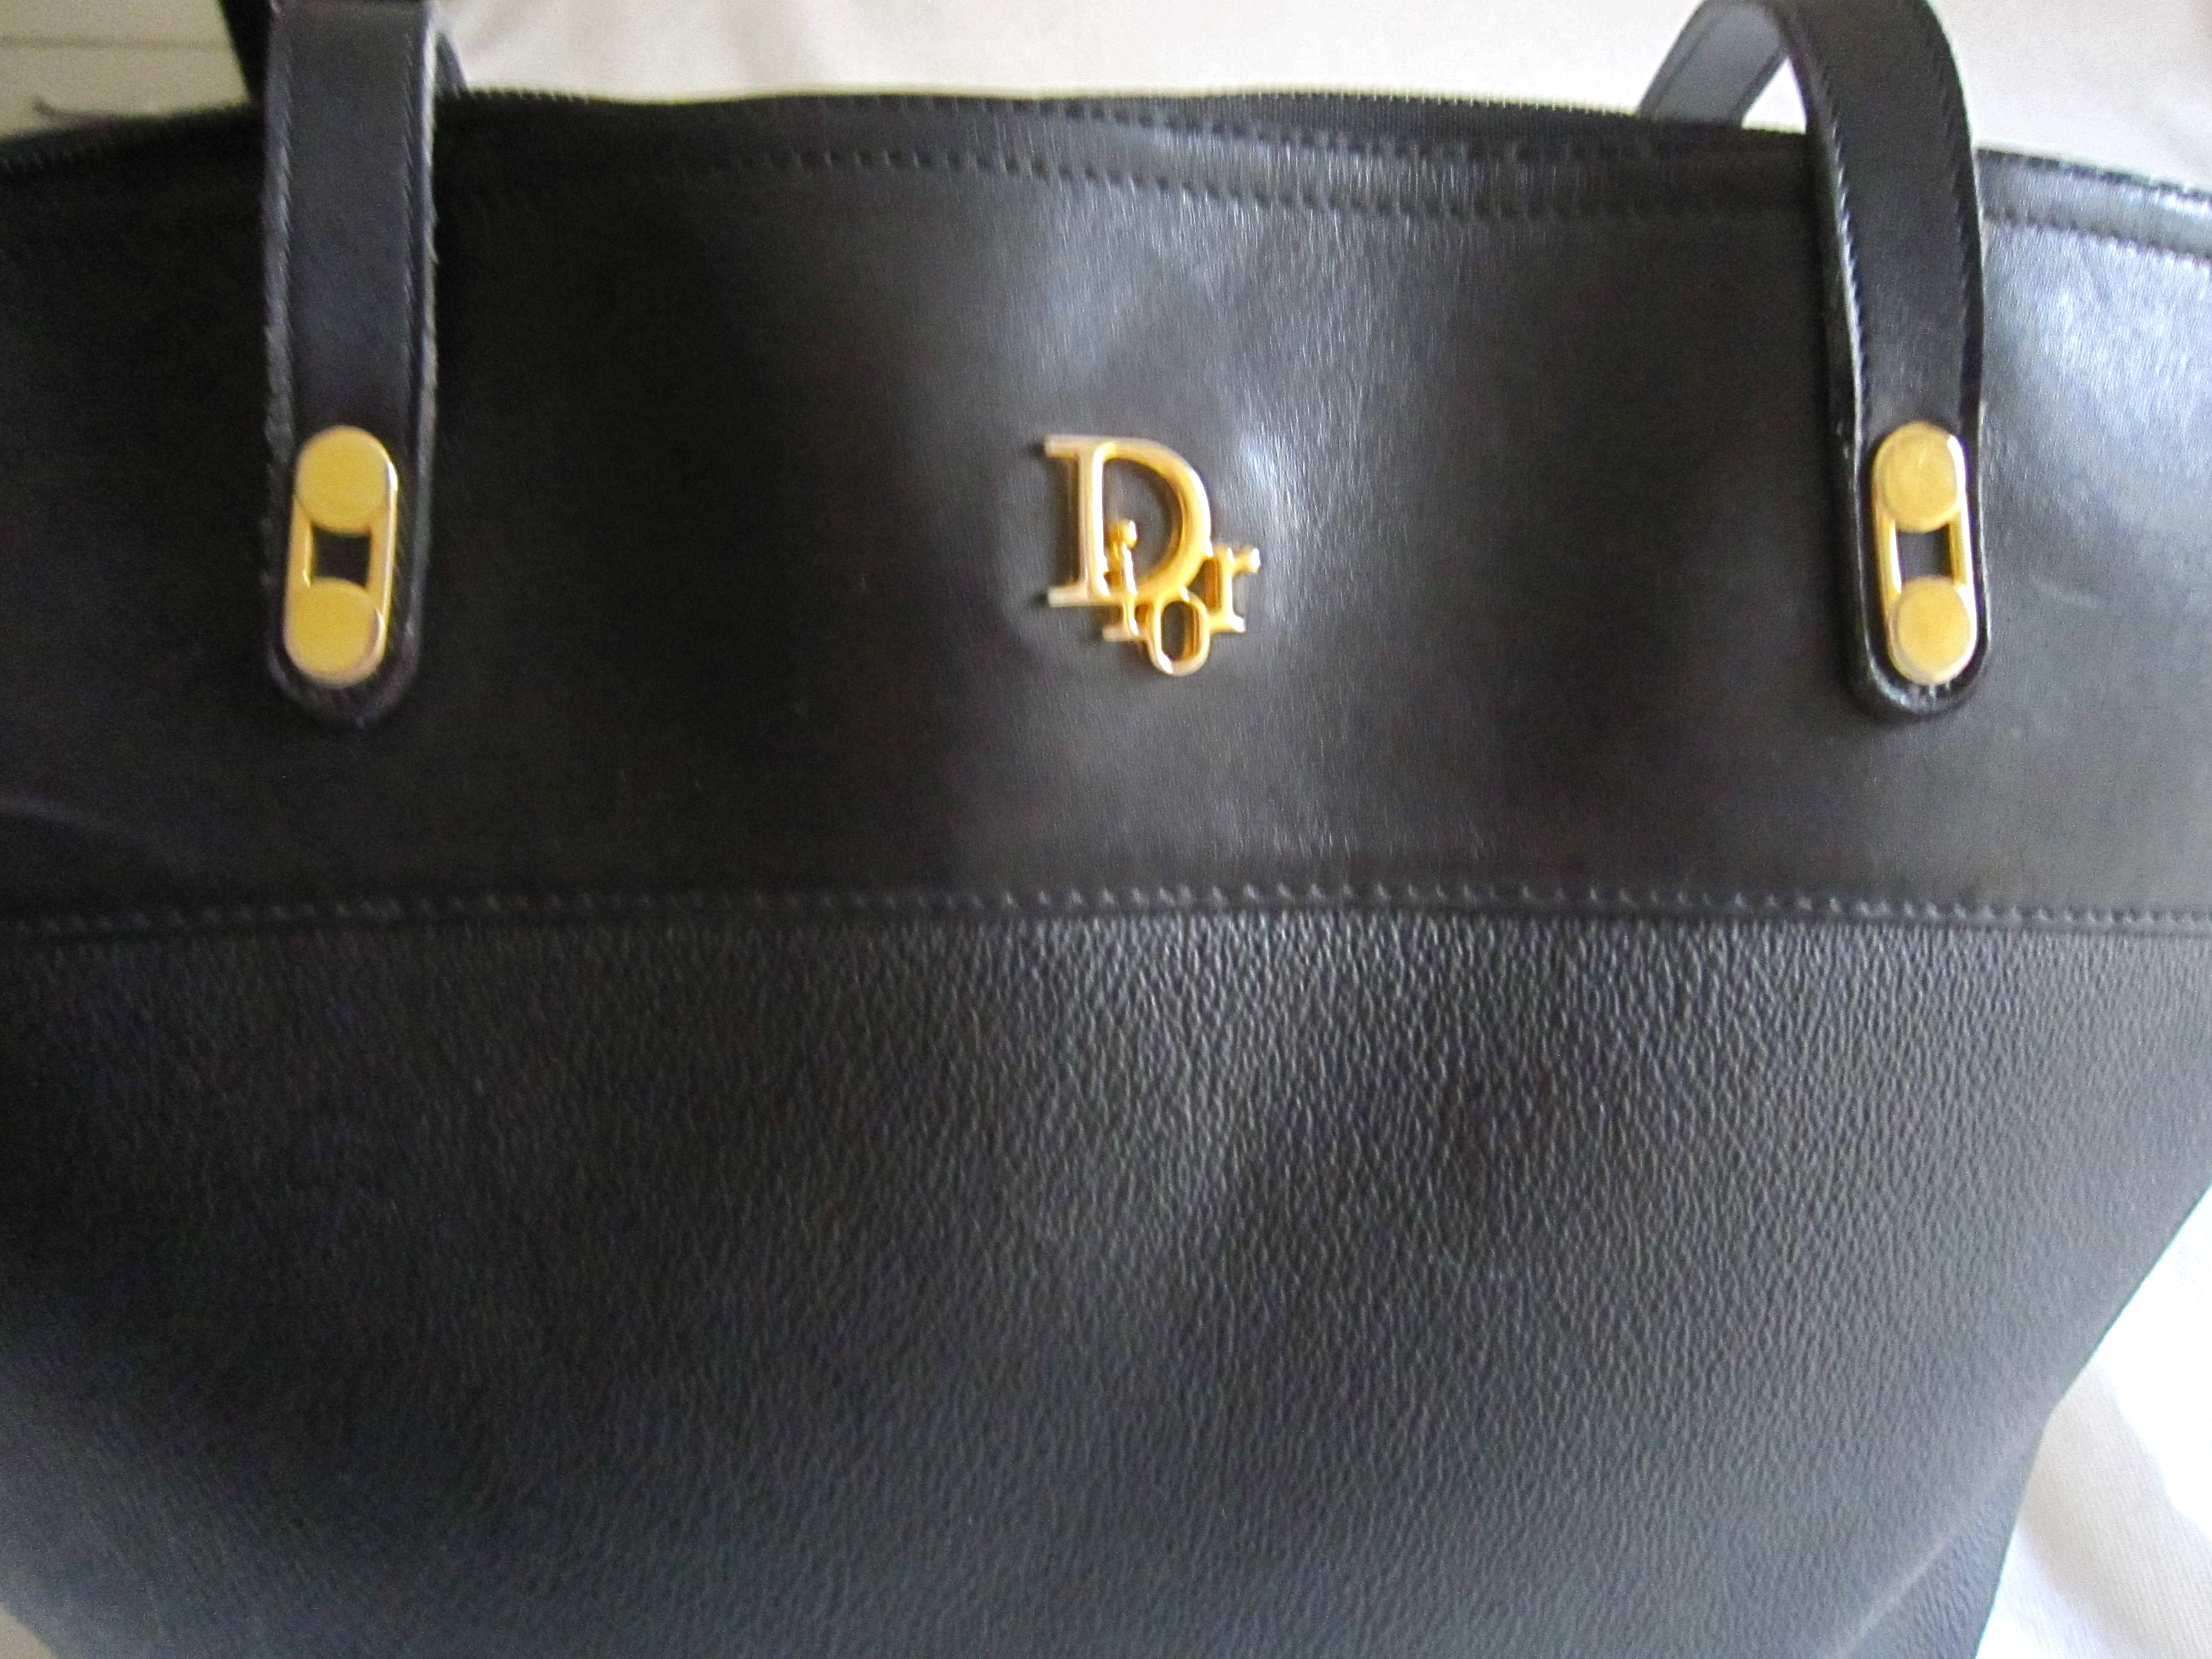 Christian Dior Vintage Leather Tote Bag